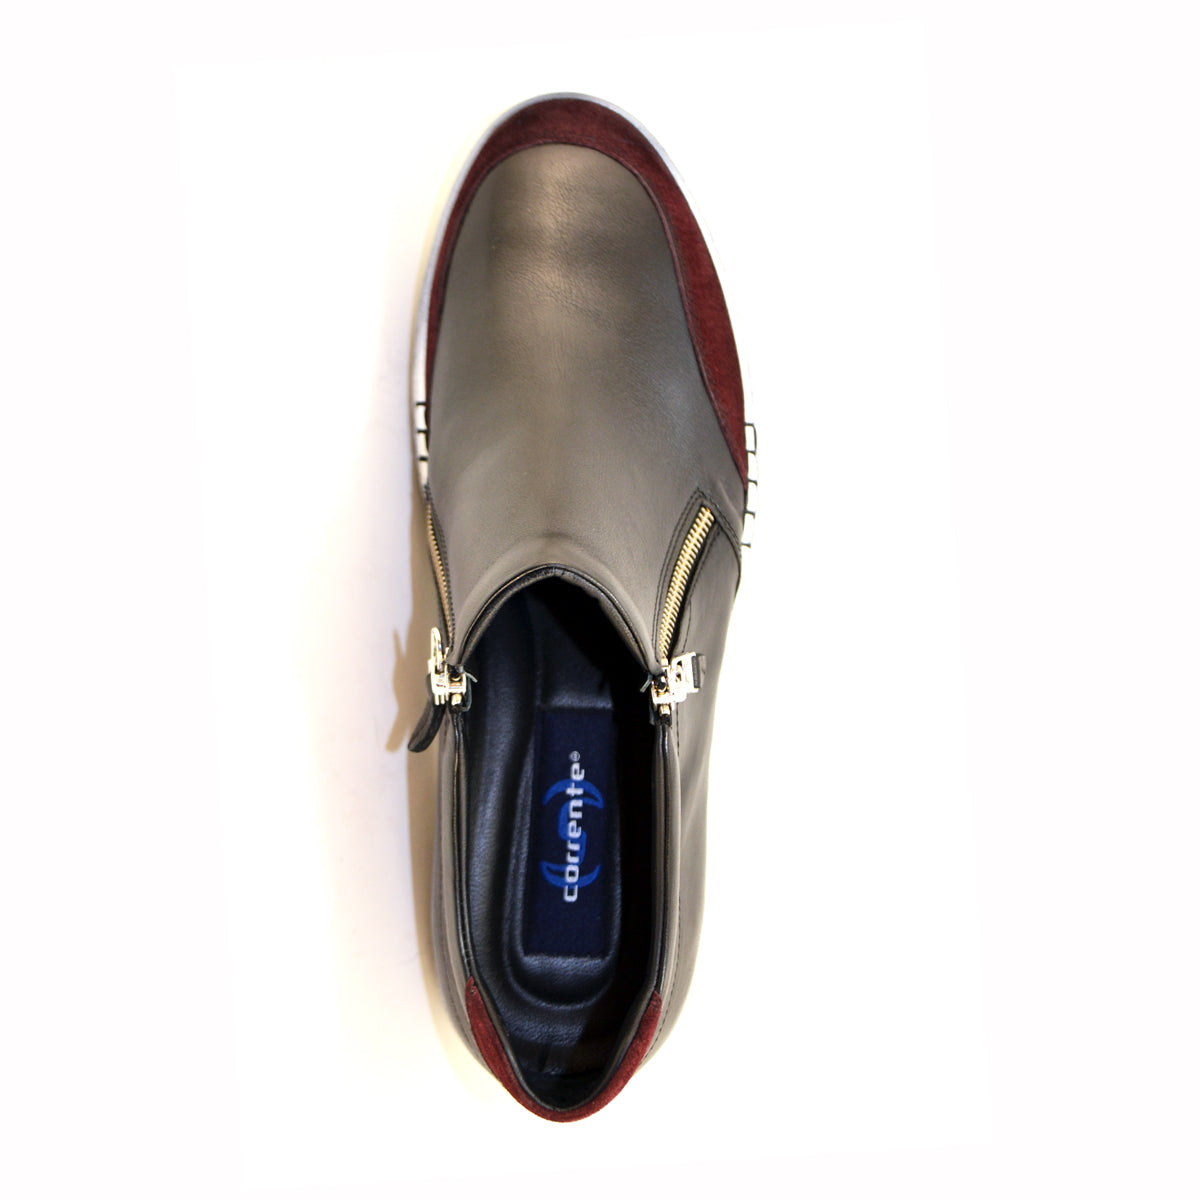 Corrente 3950 Two Tone High Top Zipper Sneaker - Black/Burgundy